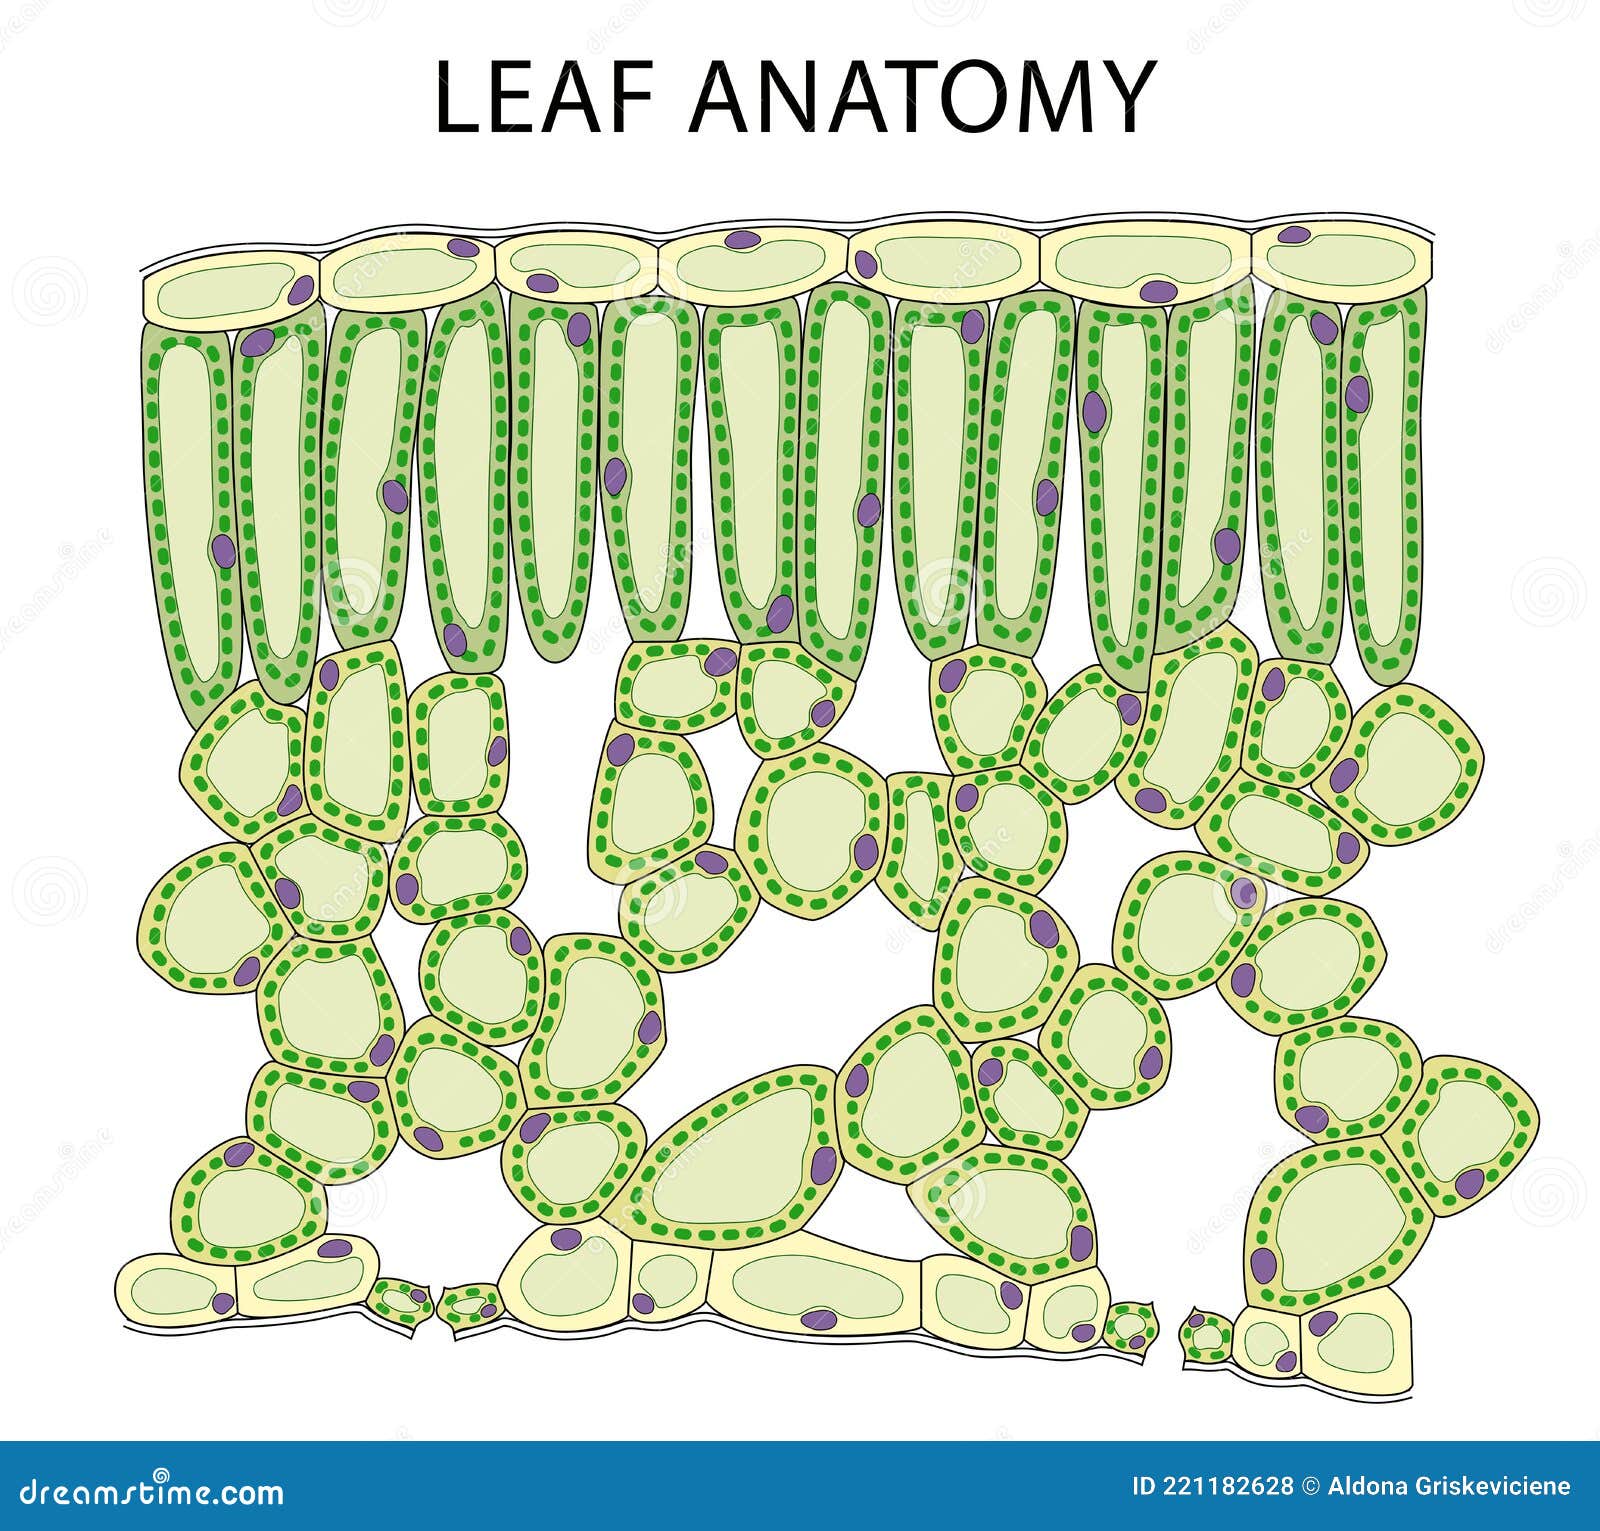 Steam and leaf diagram что это фото 16